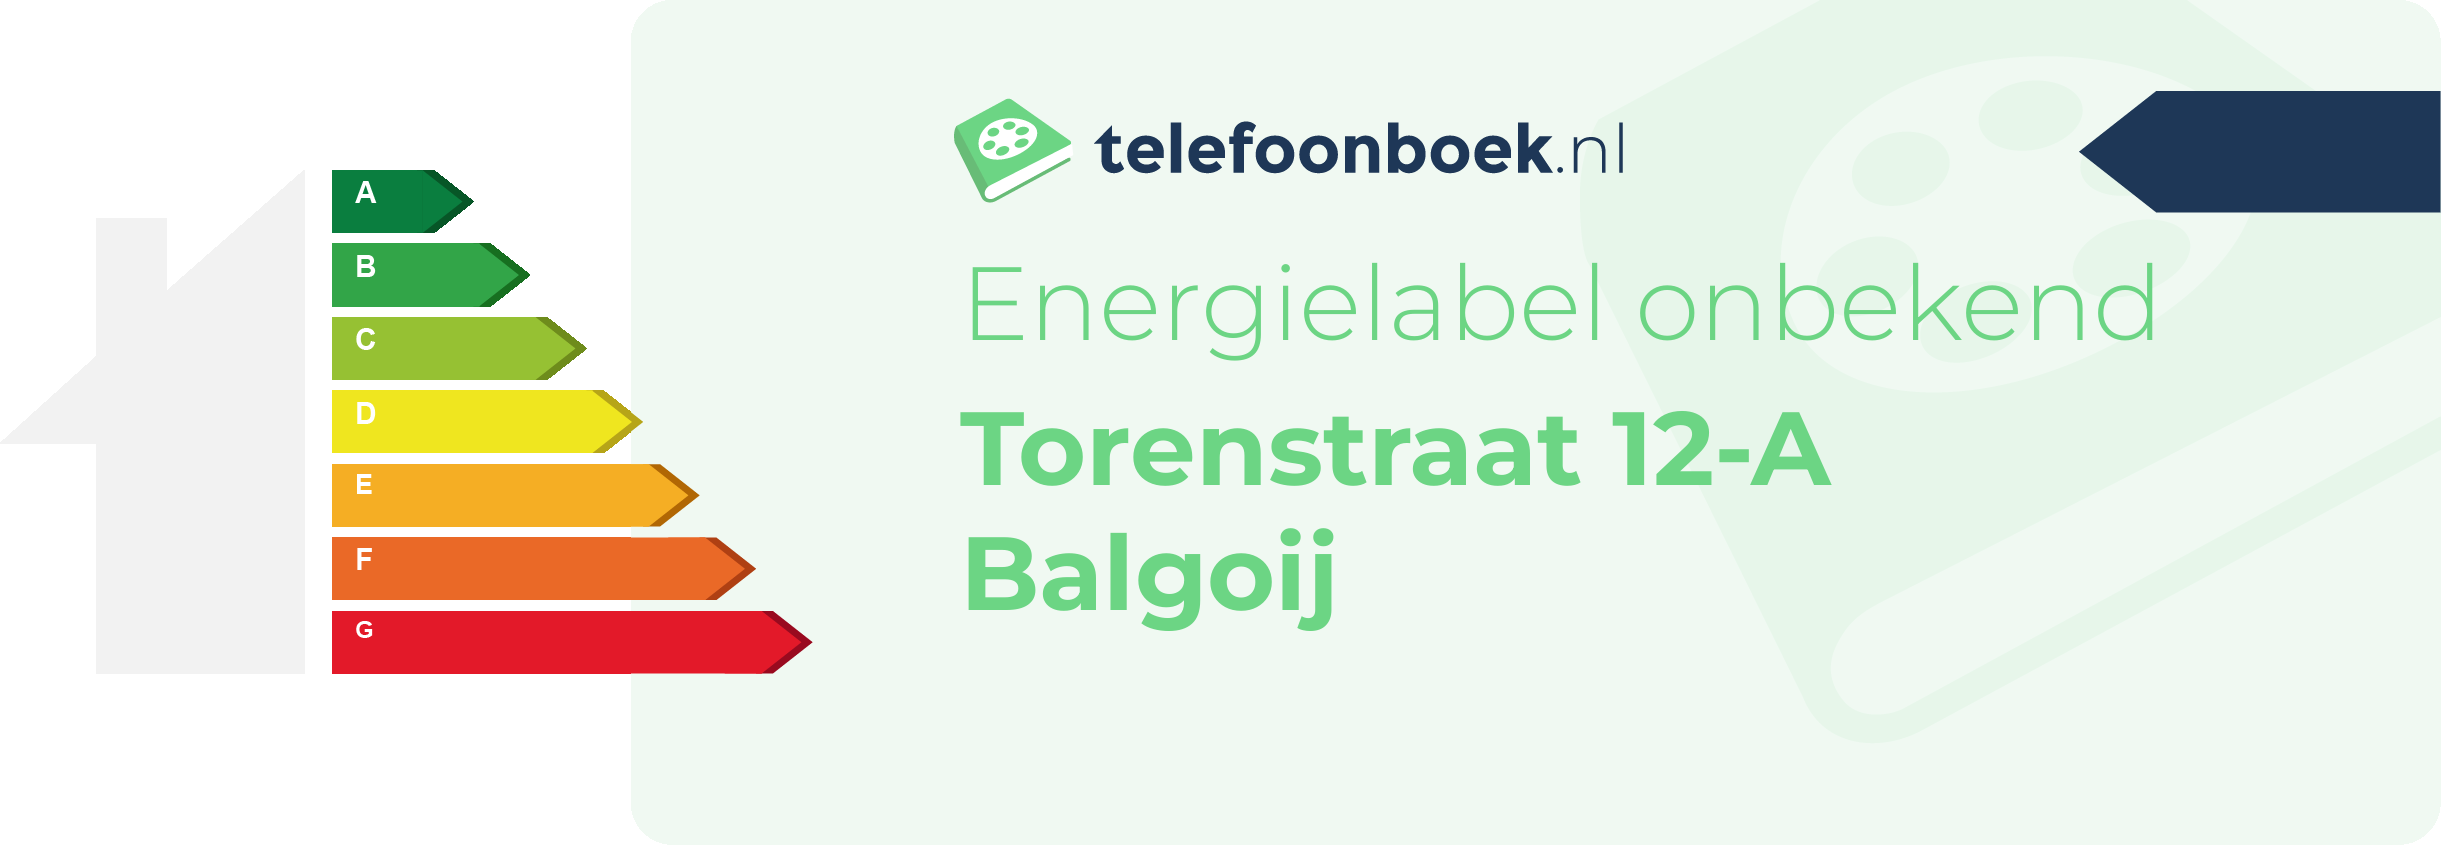 Energielabel Torenstraat 12-A Balgoij